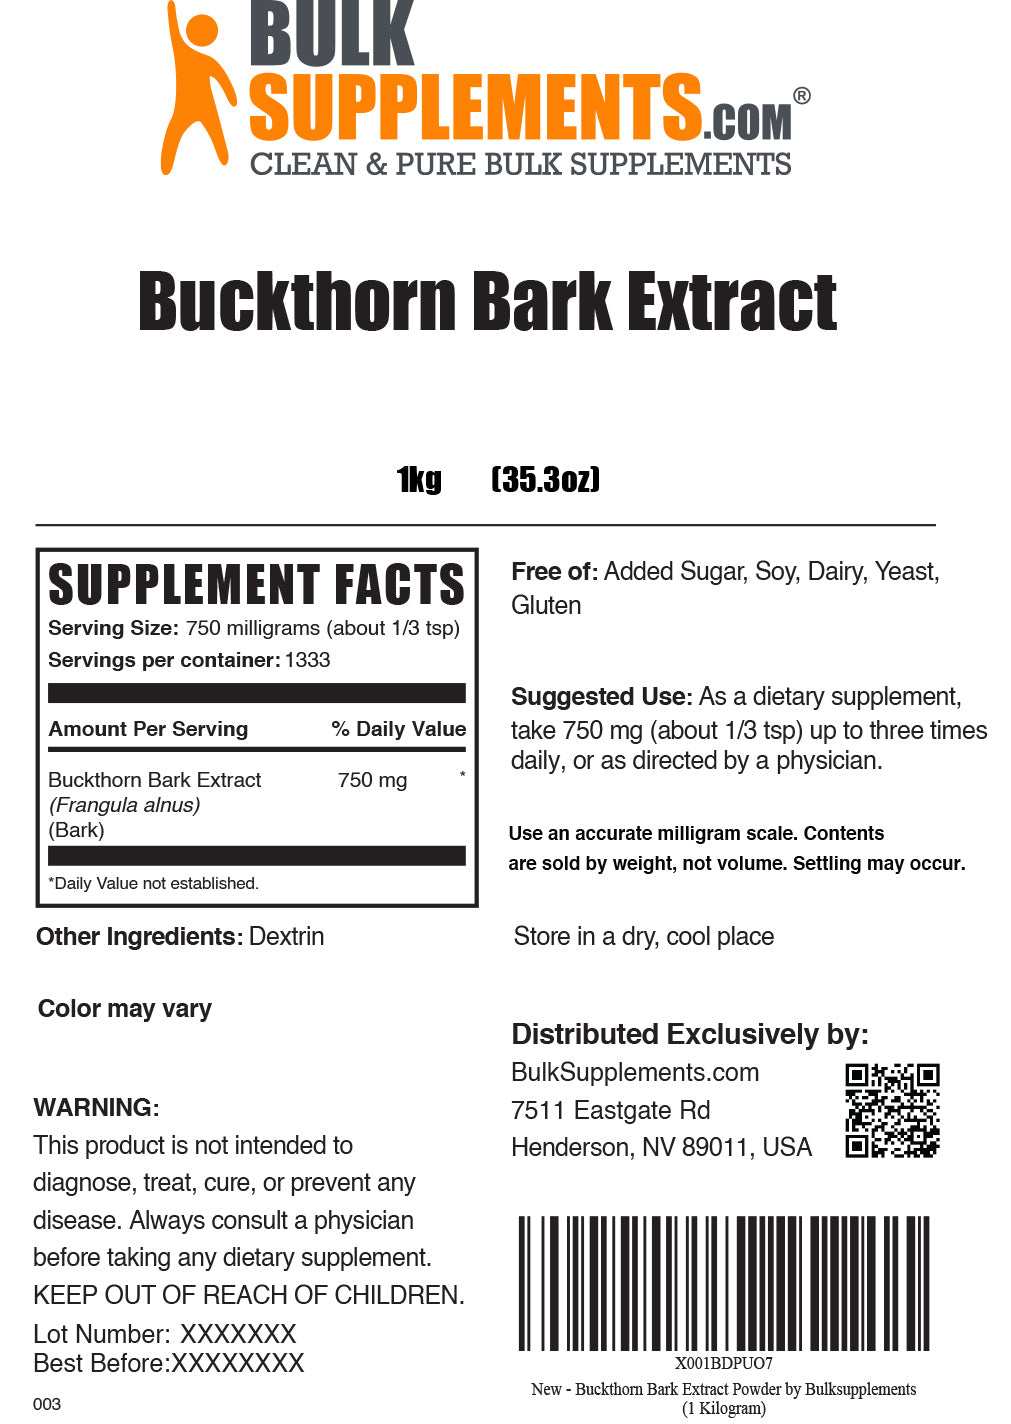 1kg Buckthorn Bark Extract Supplement Facts